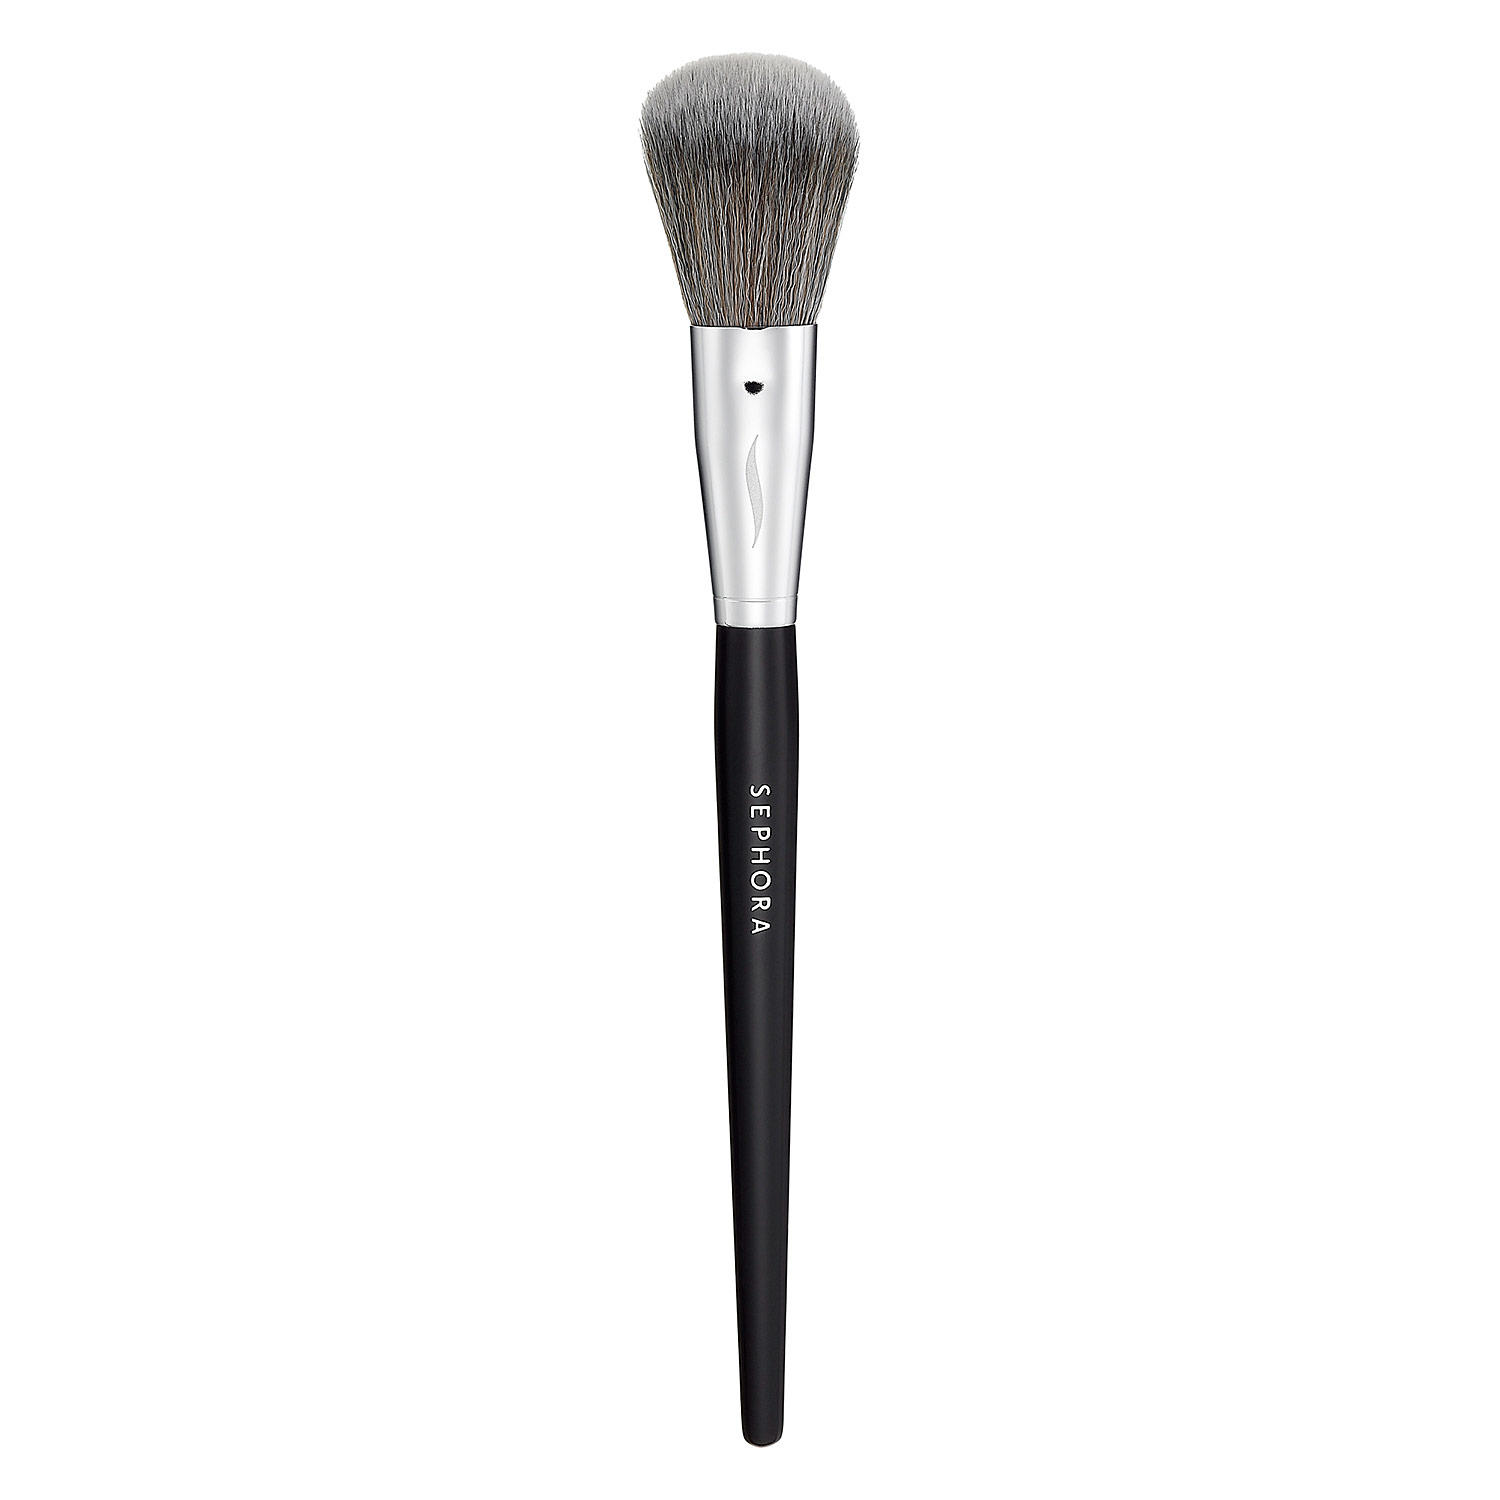 Sephora PRO Airbrush Blush Brush #54